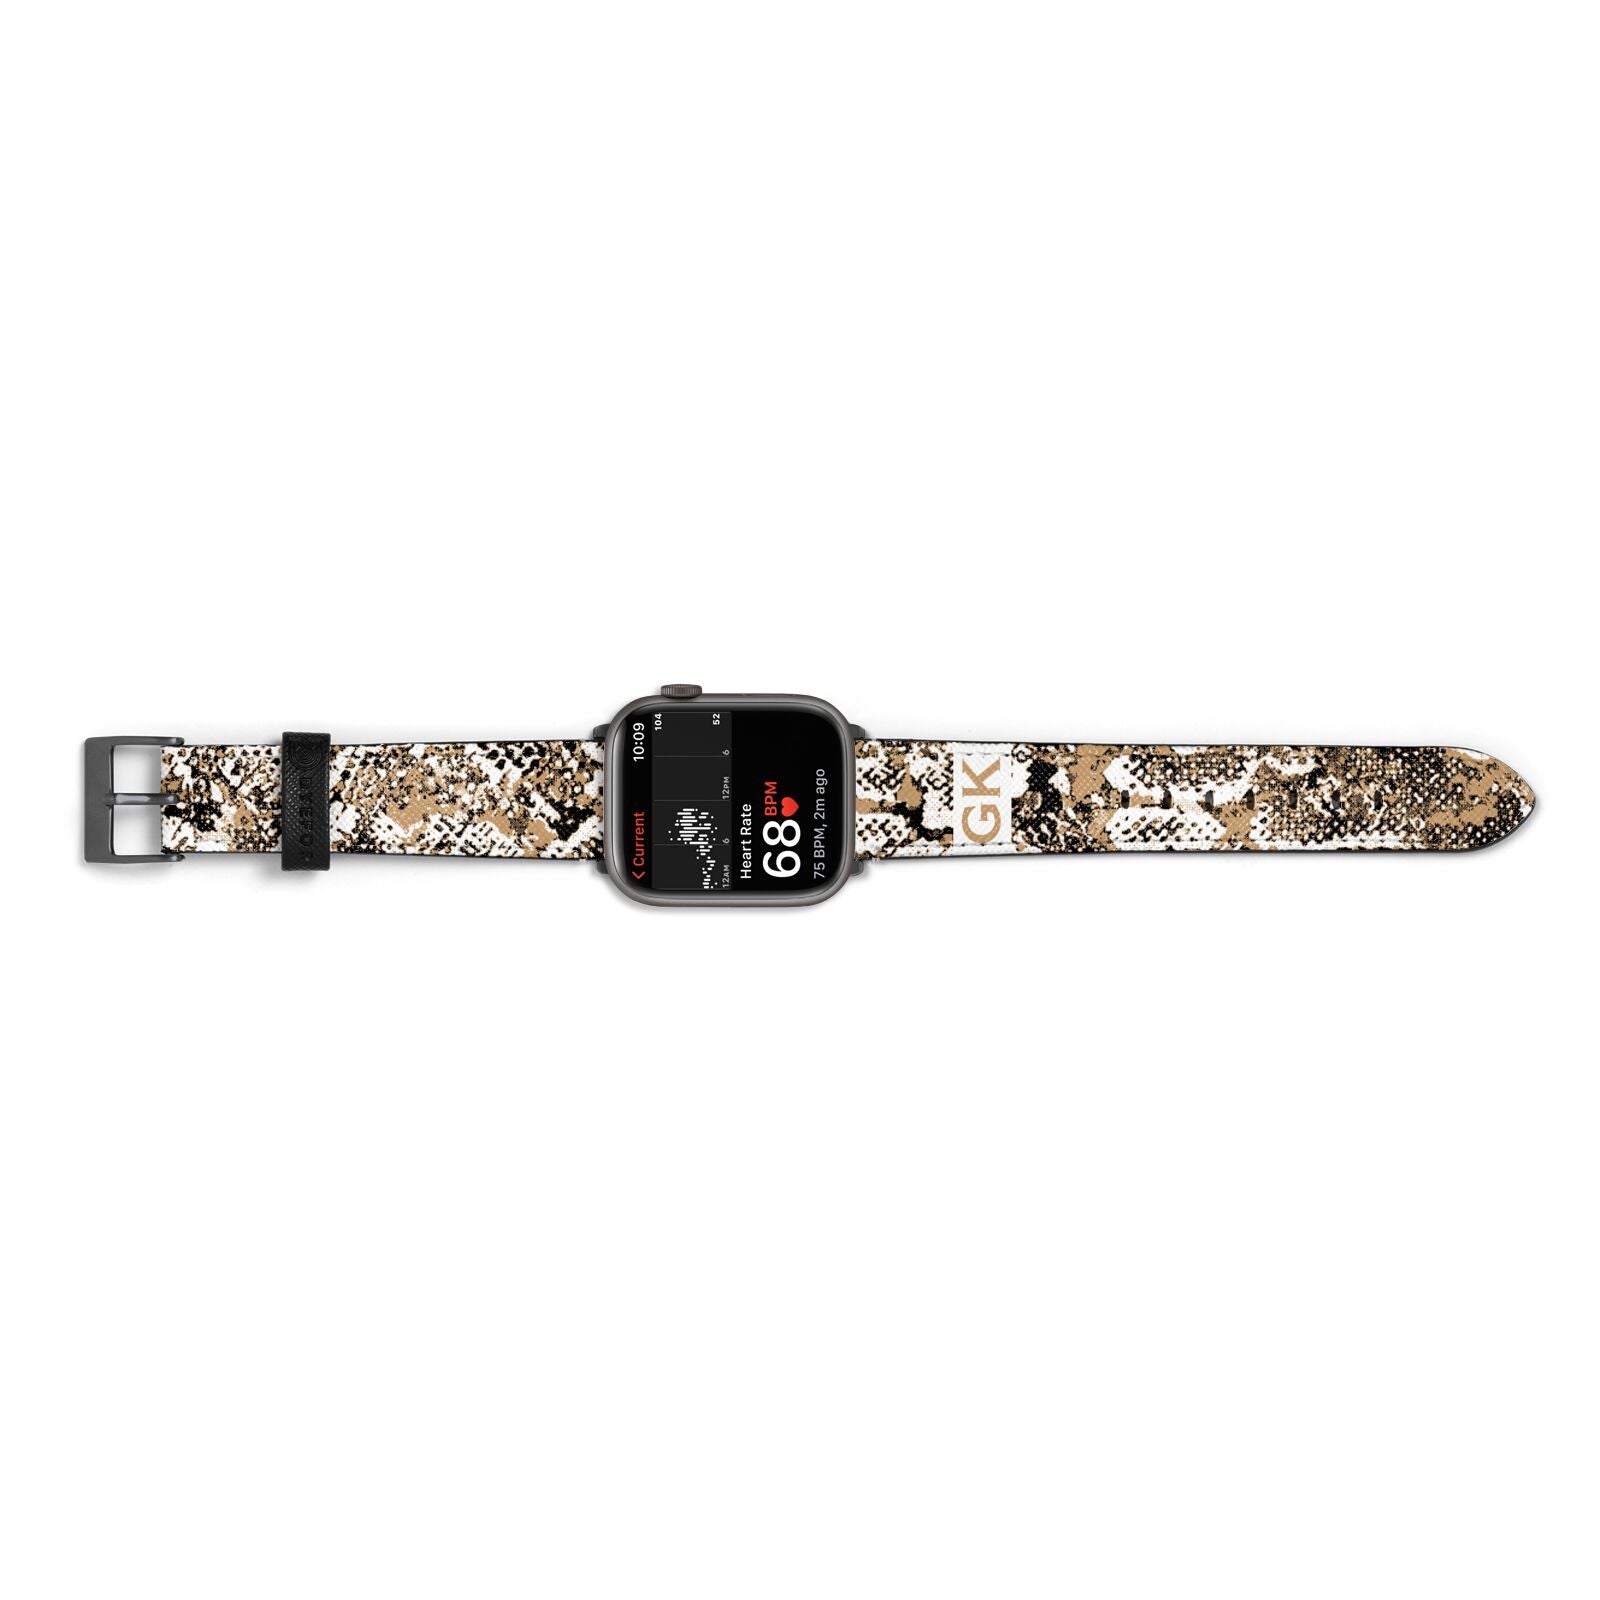 Custom Tan Snakeskin Apple Watch Strap Size 38mm Landscape Image Space Grey Hardware